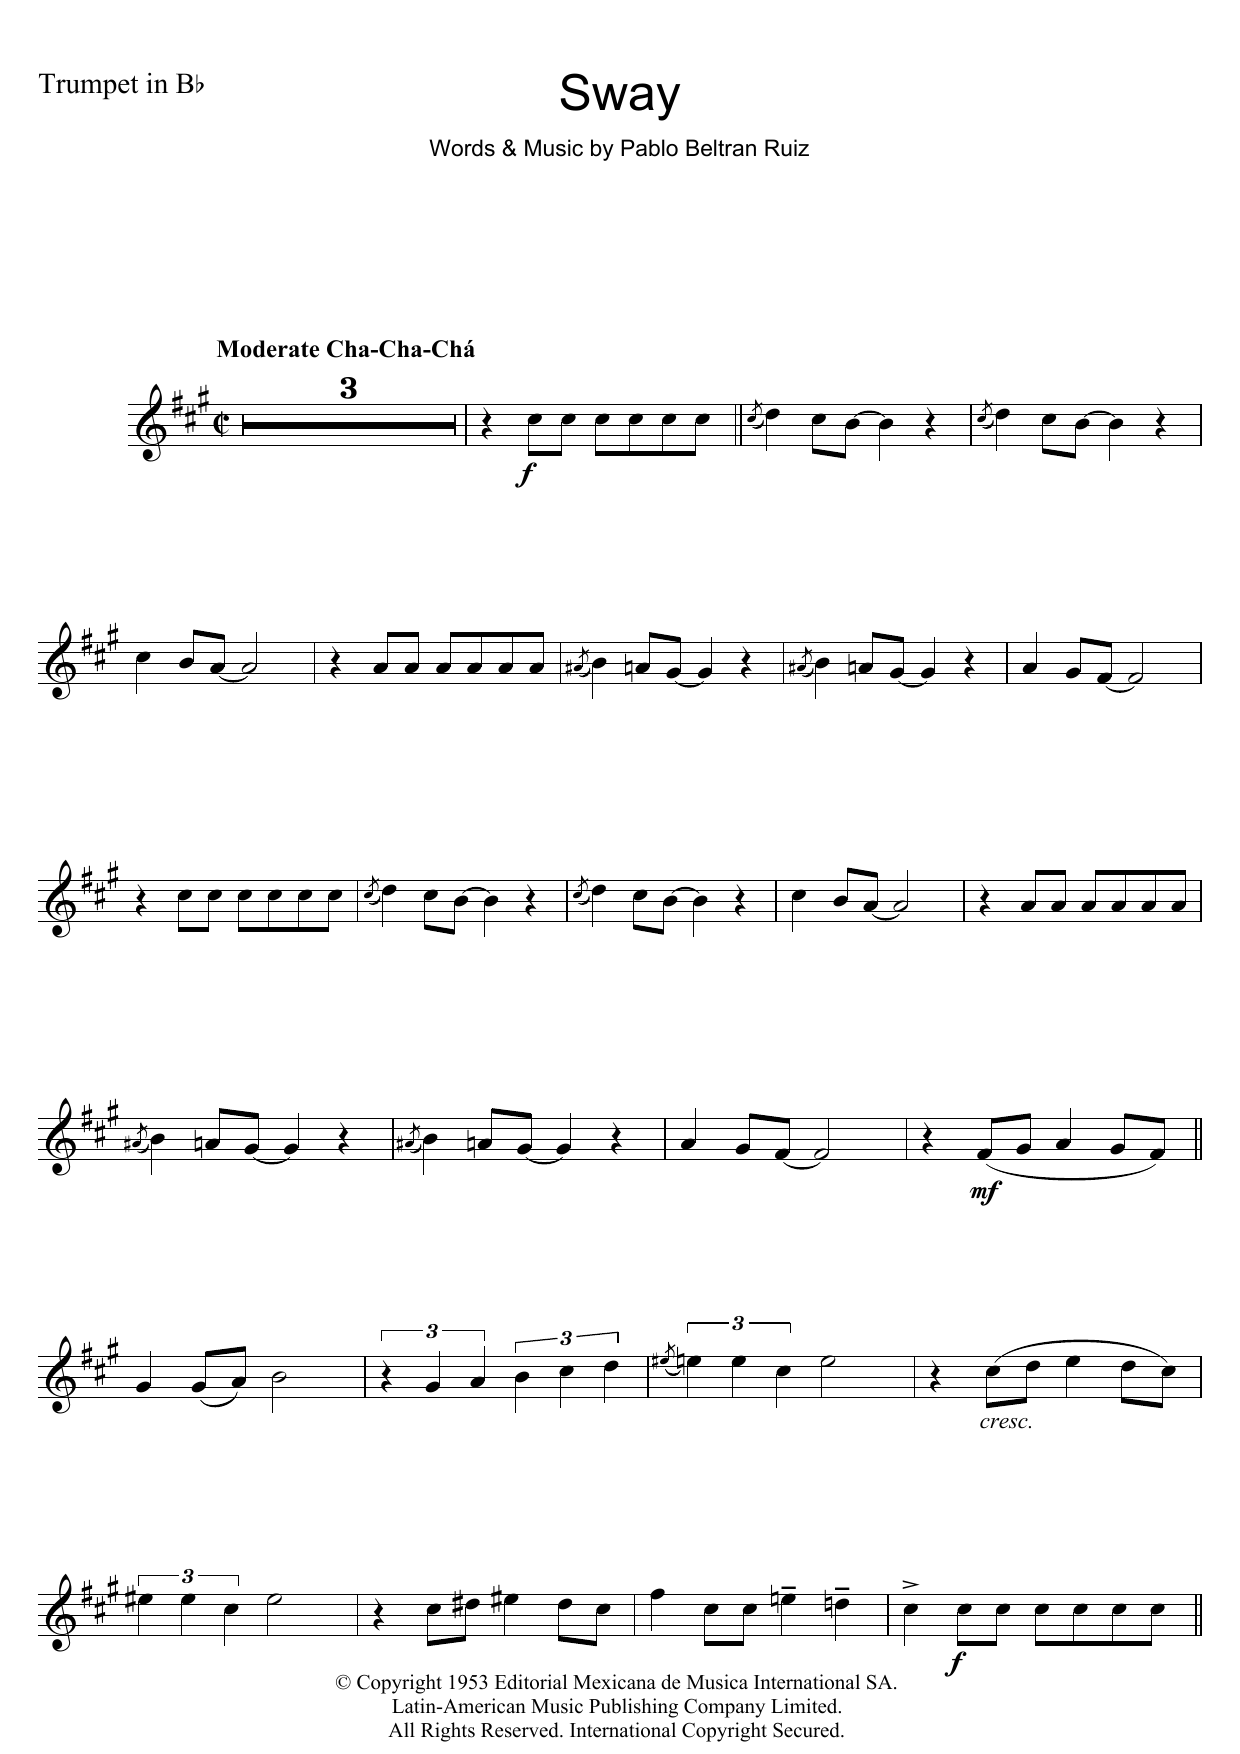 Download Pablo Beltran Ruiz Sway (Quien Sera) Sheet Music and learn how to play Lyrics & Chords PDF digital score in minutes